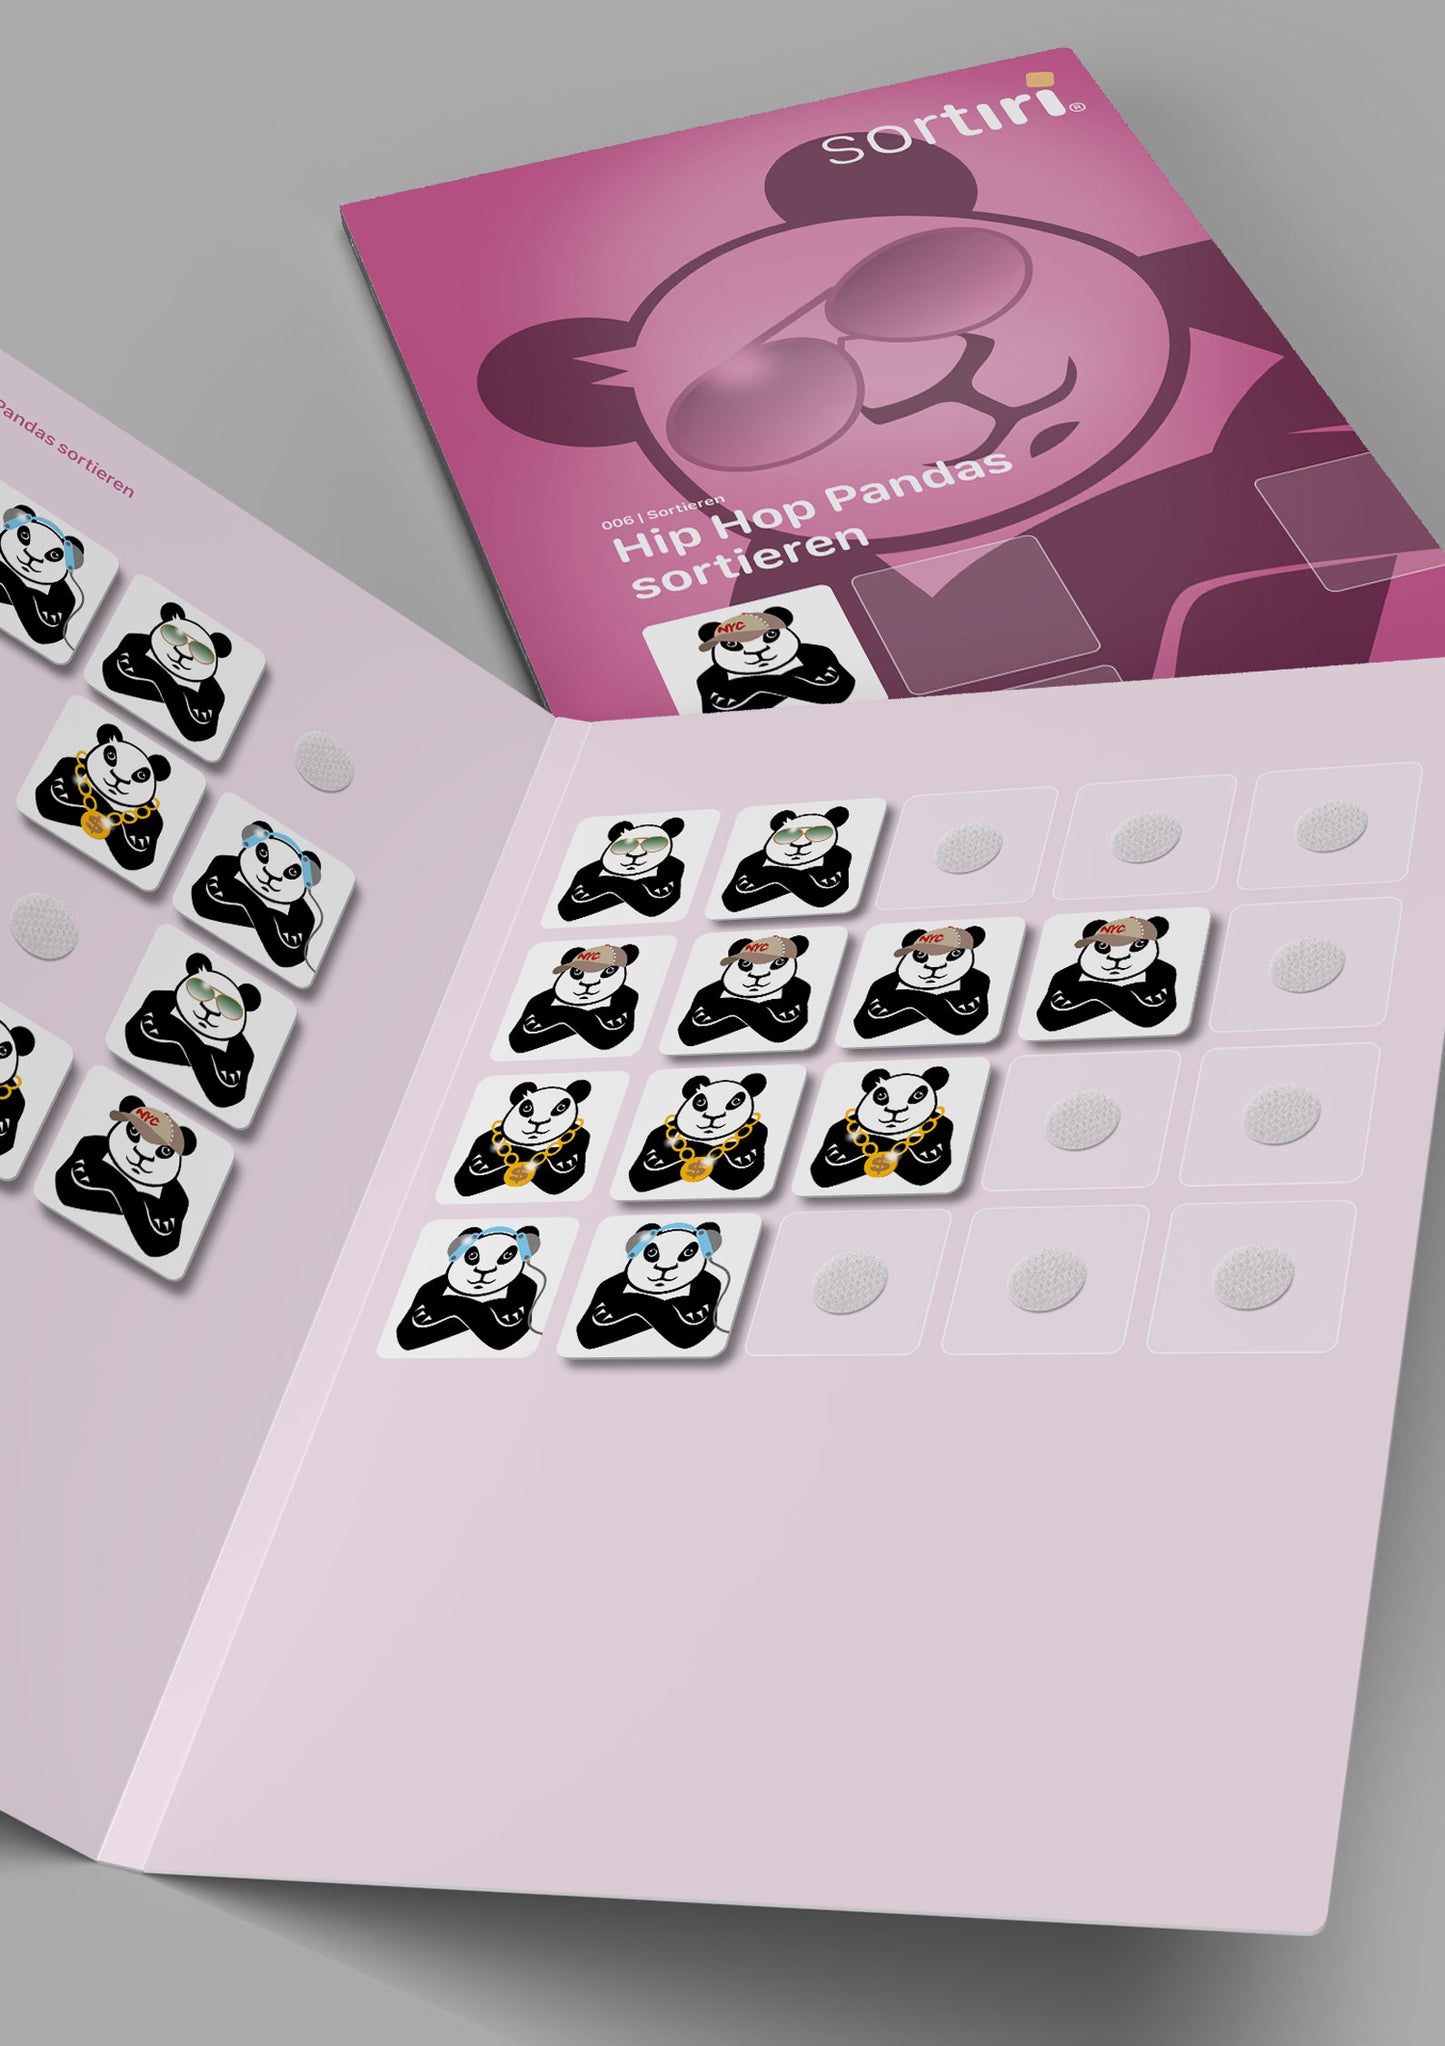 sortiri Klettmappe Hip Hop Pandas sortieren - Spiel